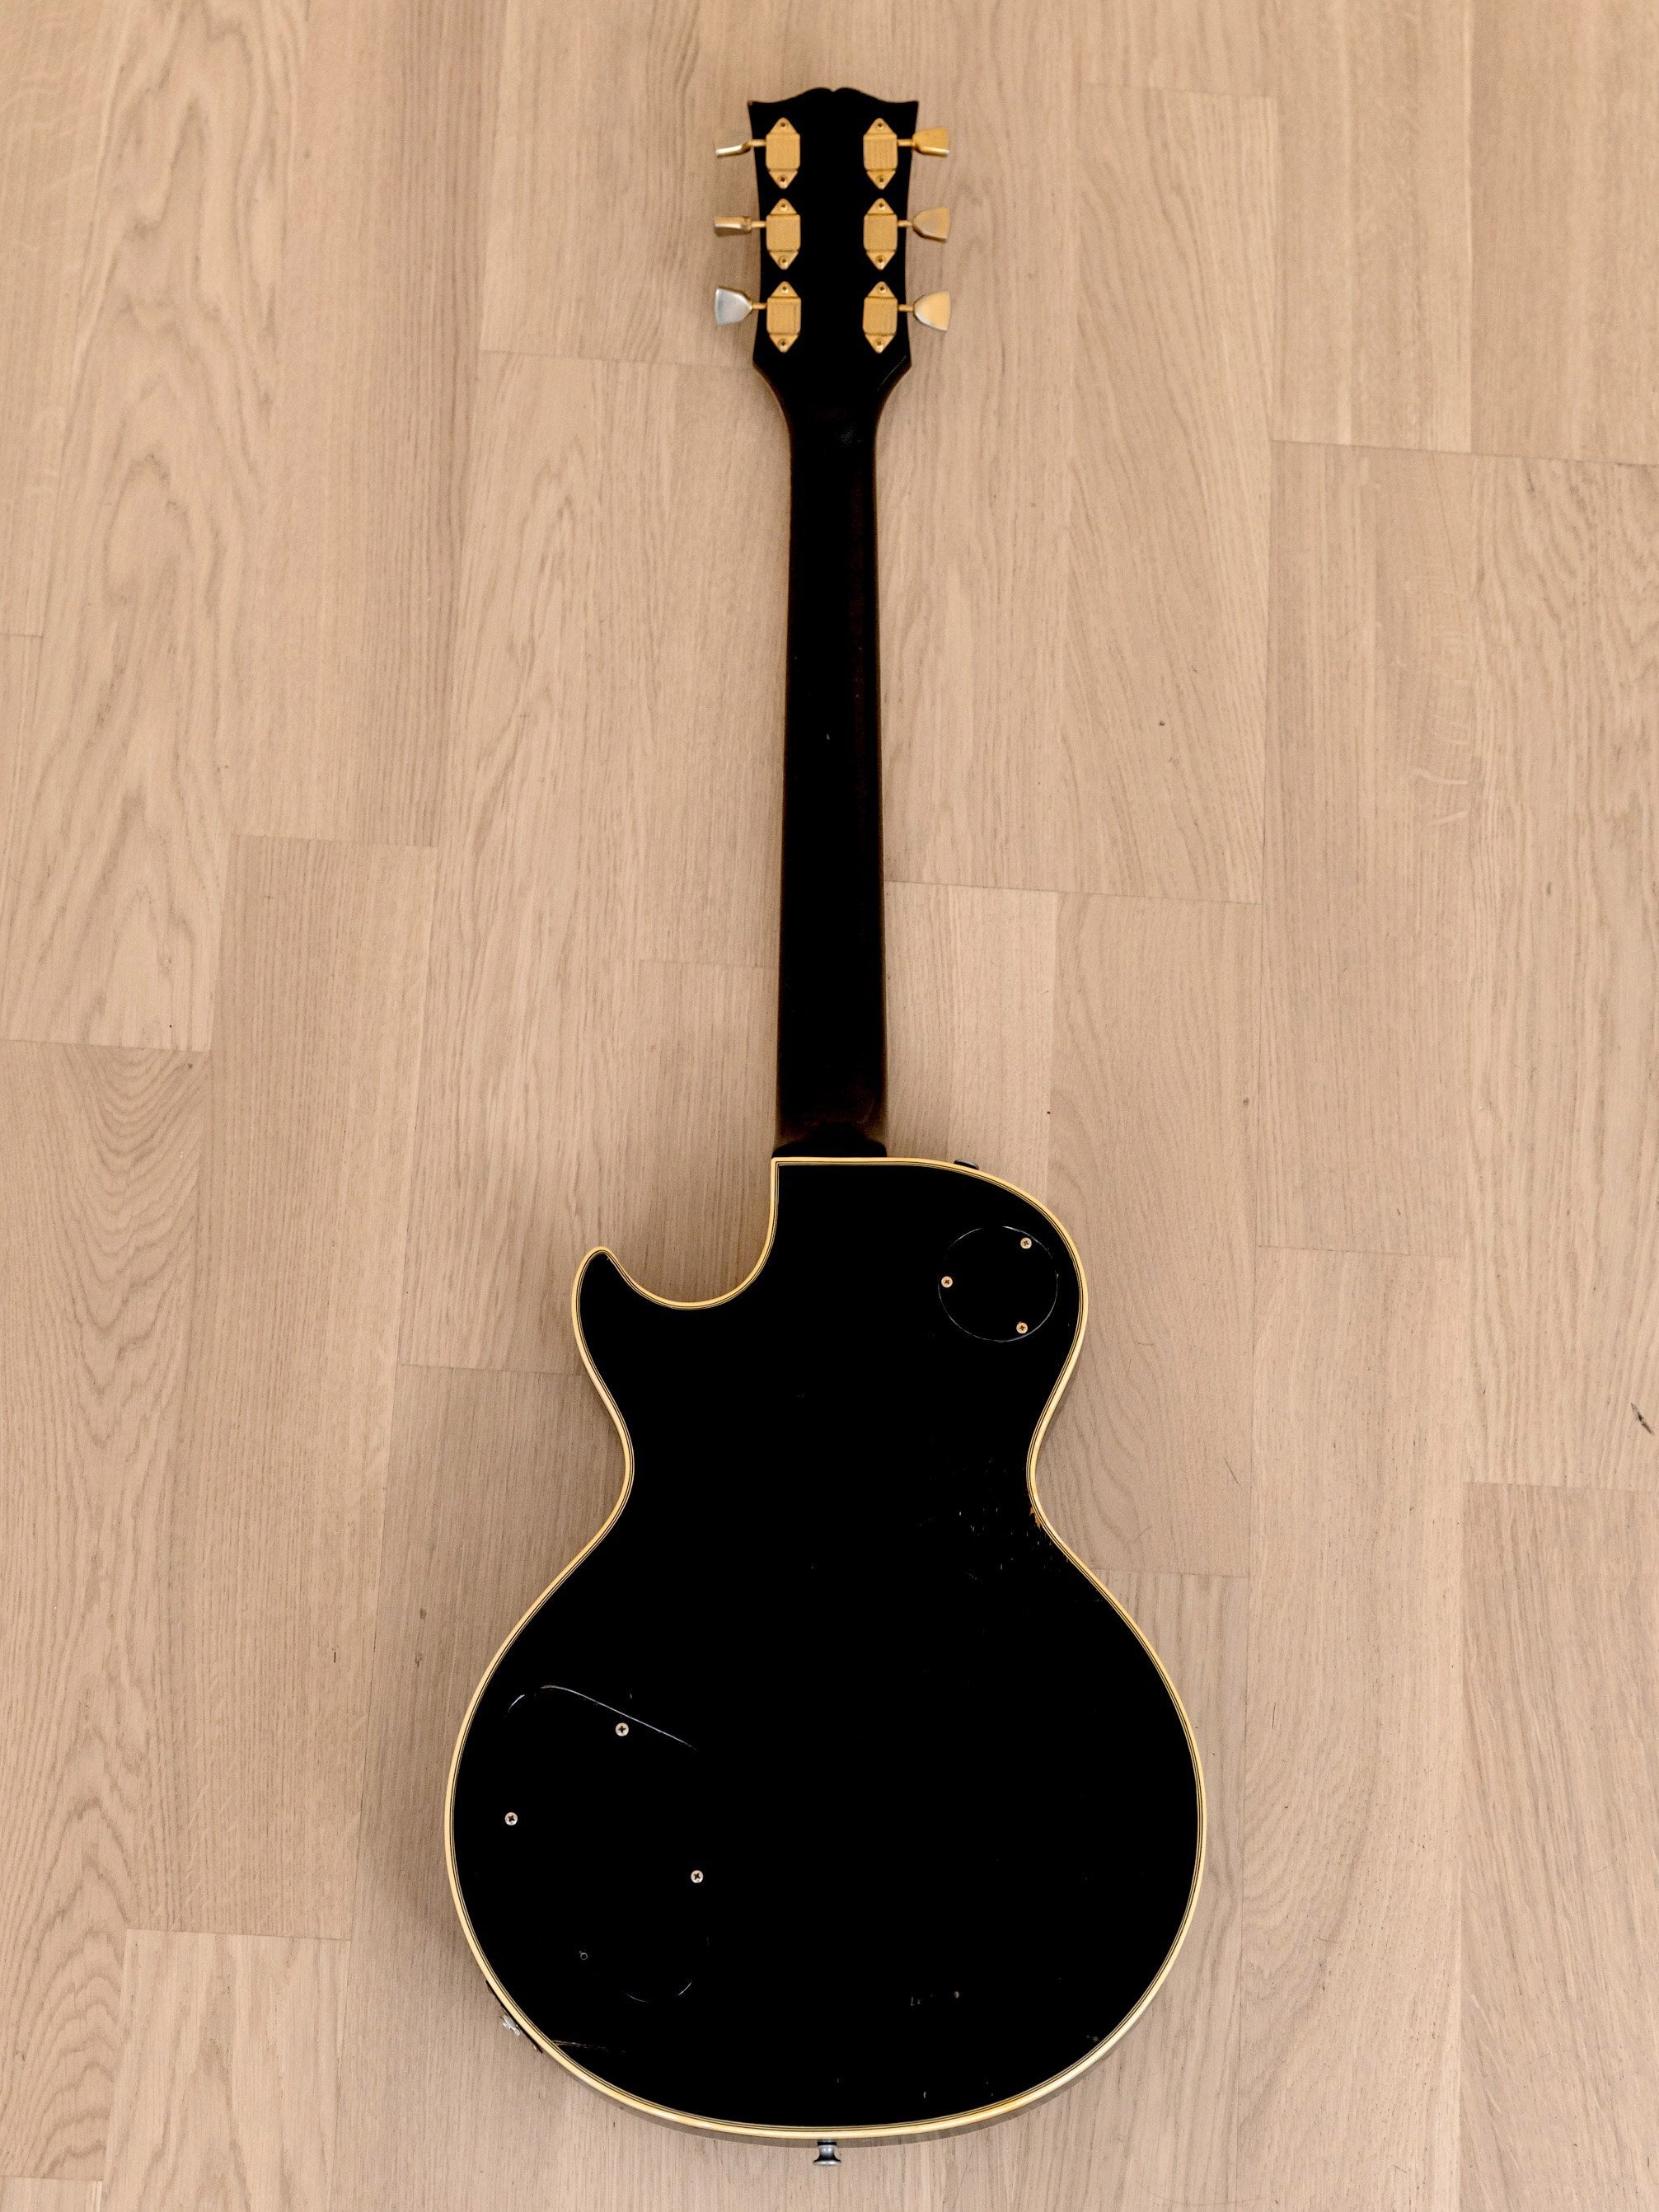 1971 Gibson Les Paul Custom Black Beauty Vintage Electric Guitar w/ T Tops, Case